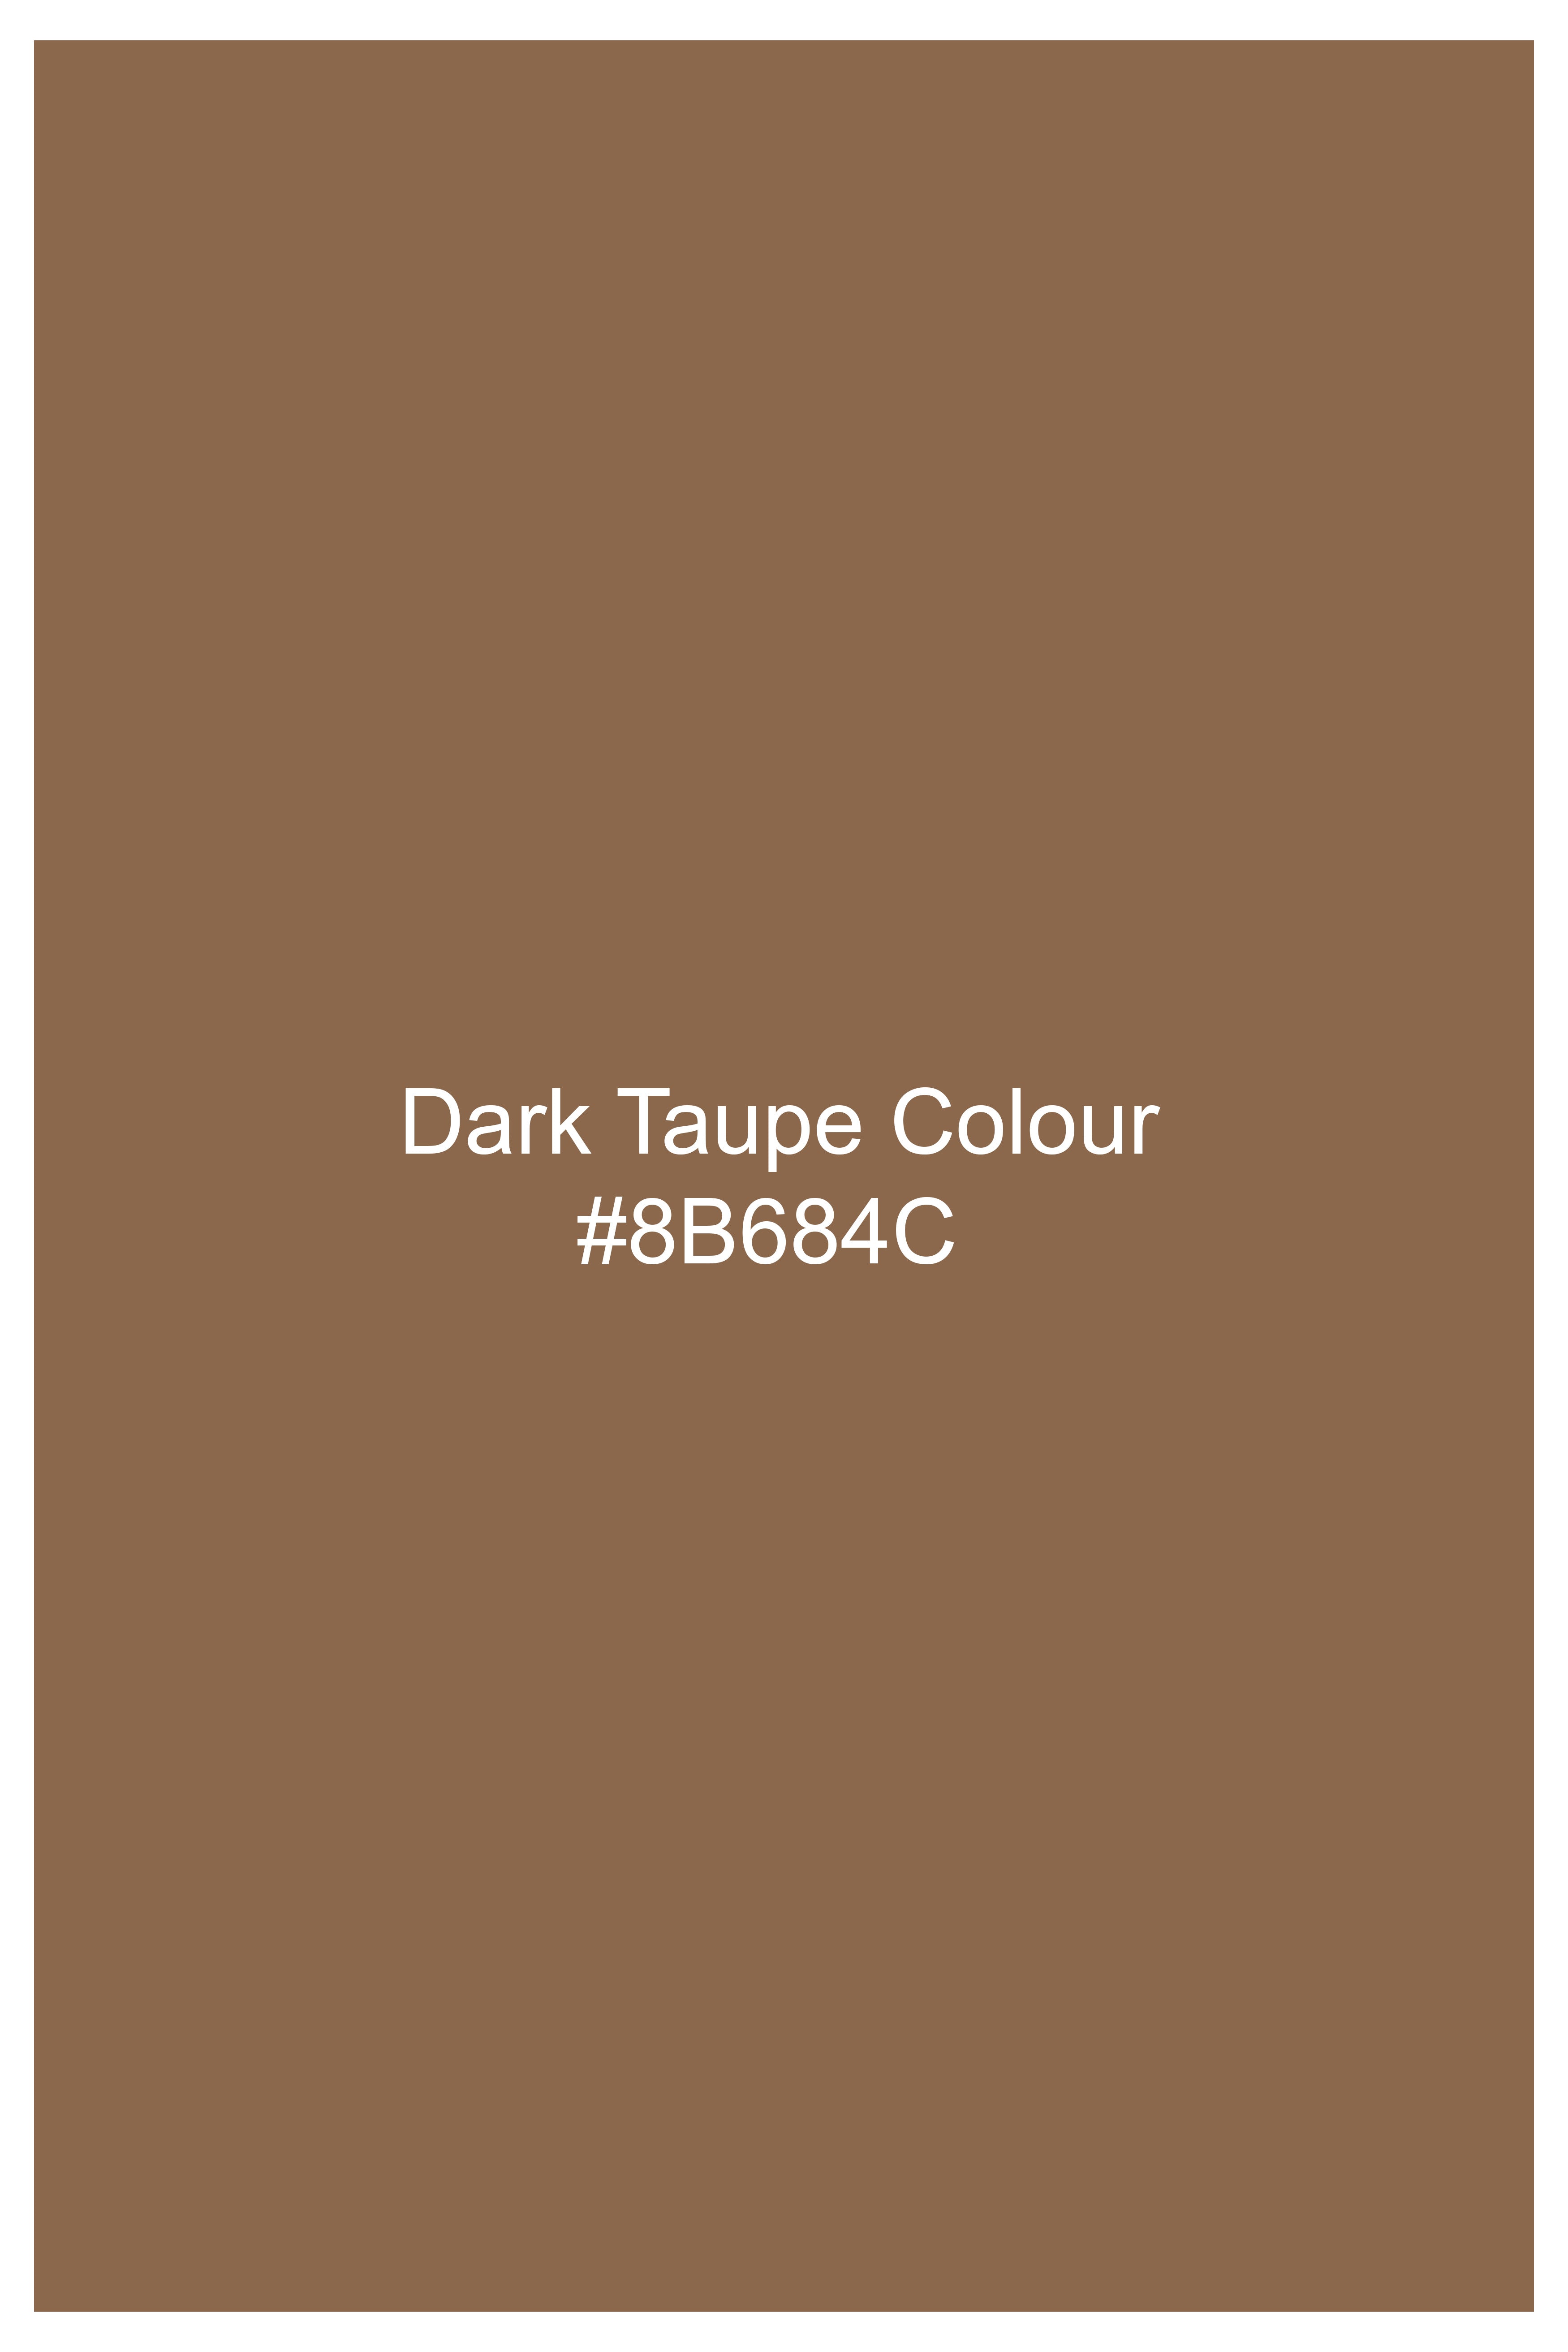 Dark Taupe Brown Striped with Embroidered Patchwork Super Soft Premium Cotton Designer Shirt